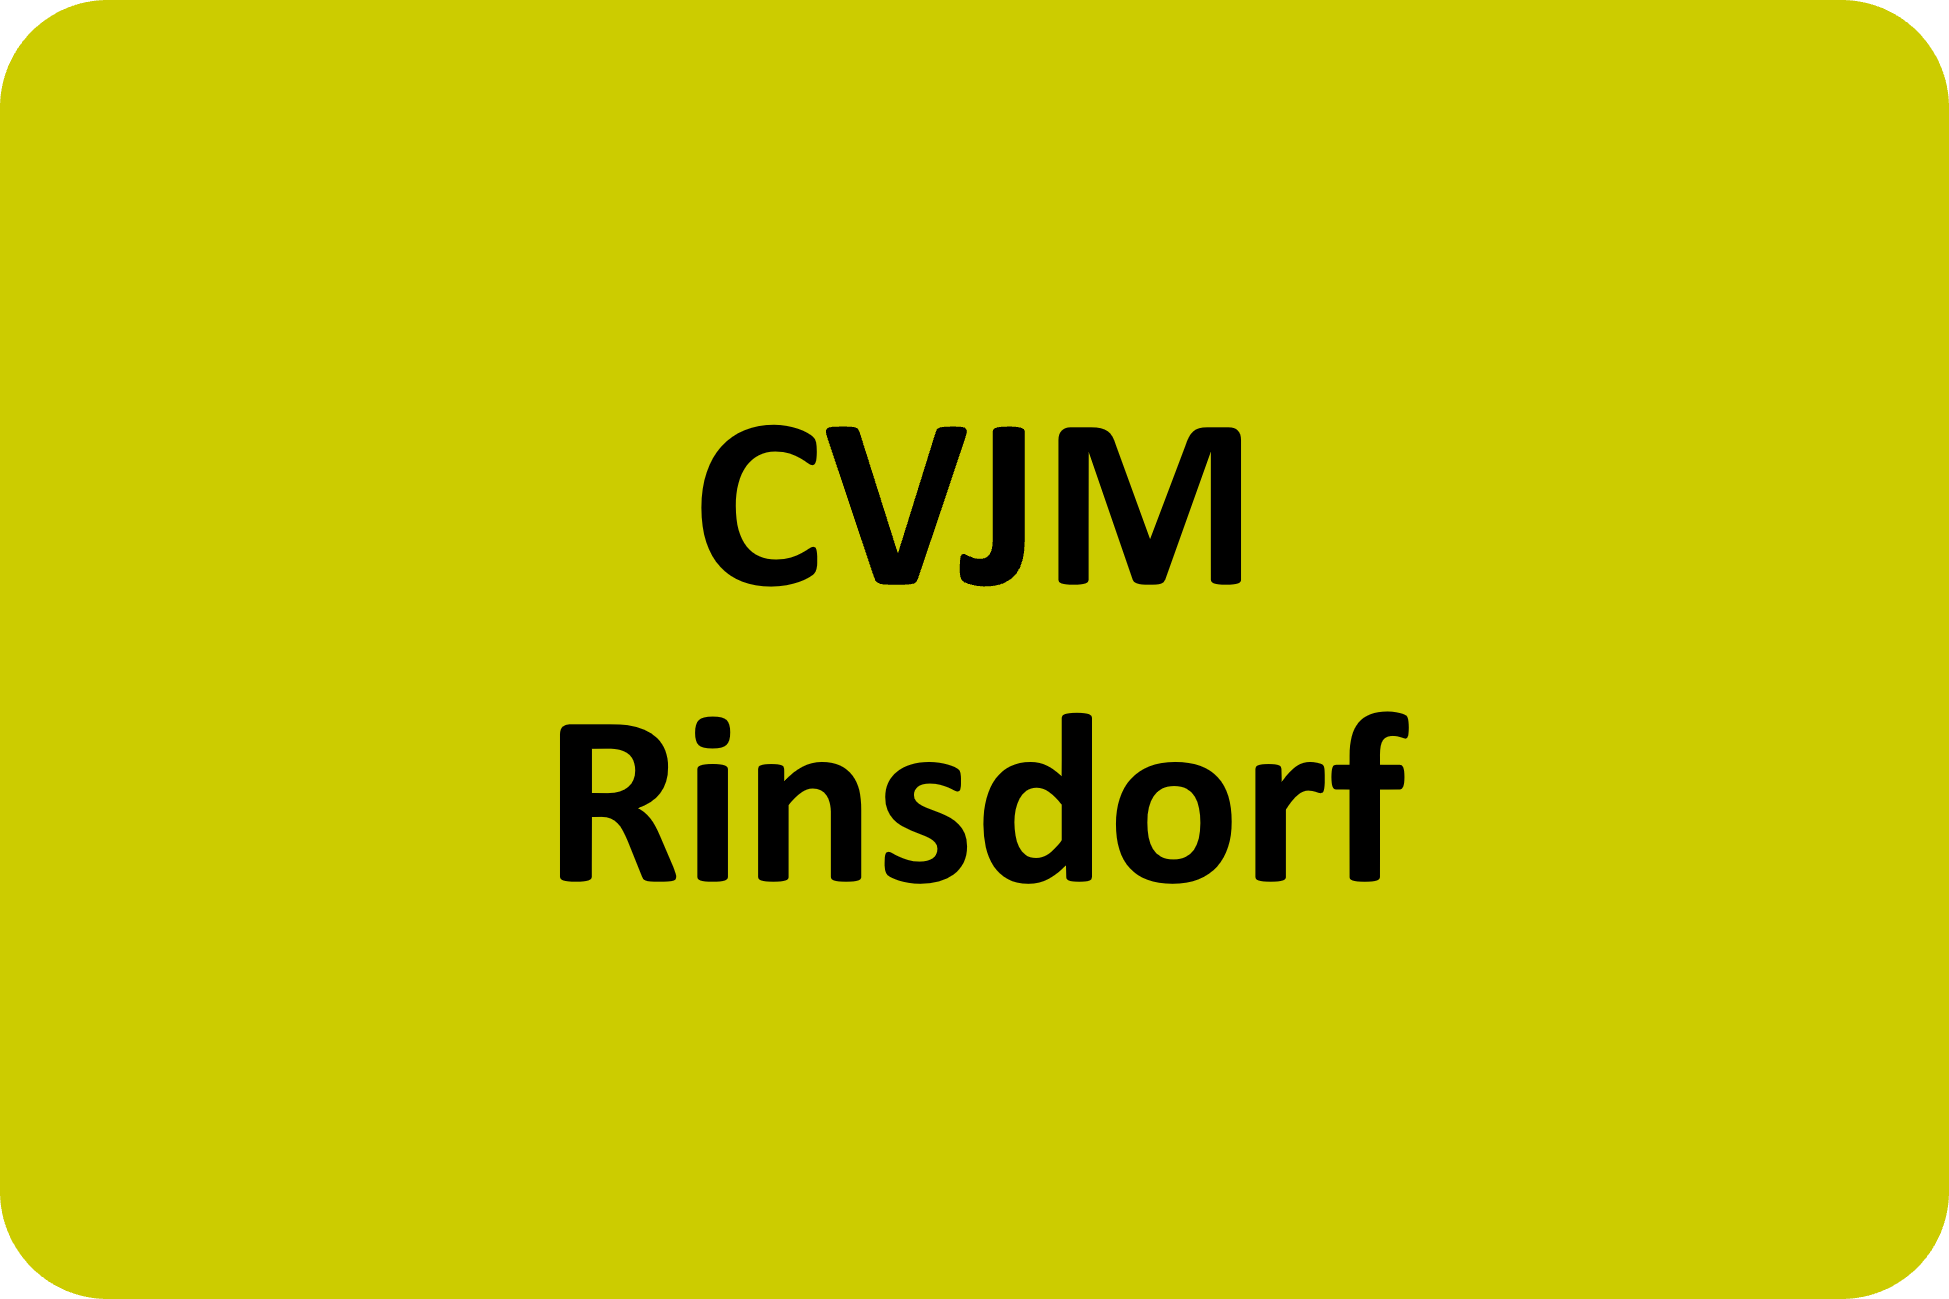 CVJM Rinsdorf